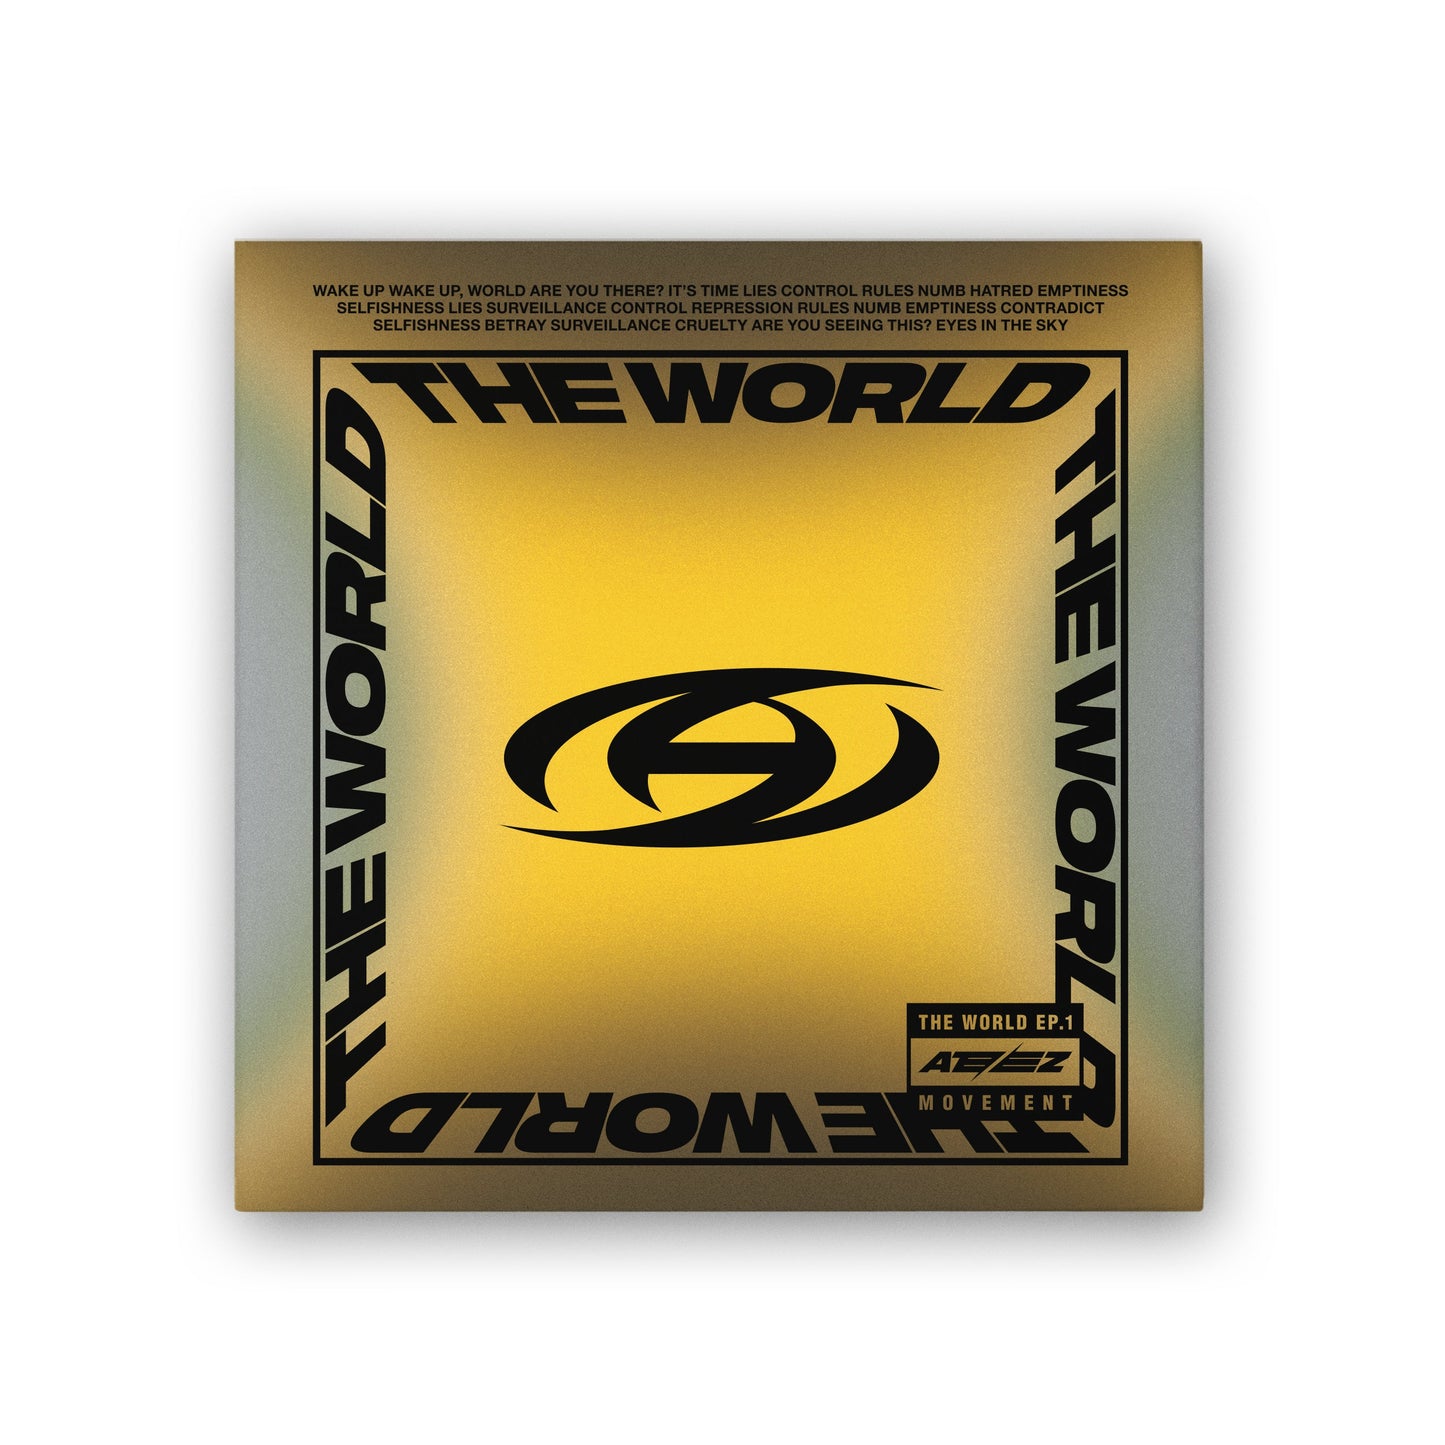 ATEEZ ALBUM 'THE WORLD EP.1 : MOVEMENT' DIARY VERSION COVER